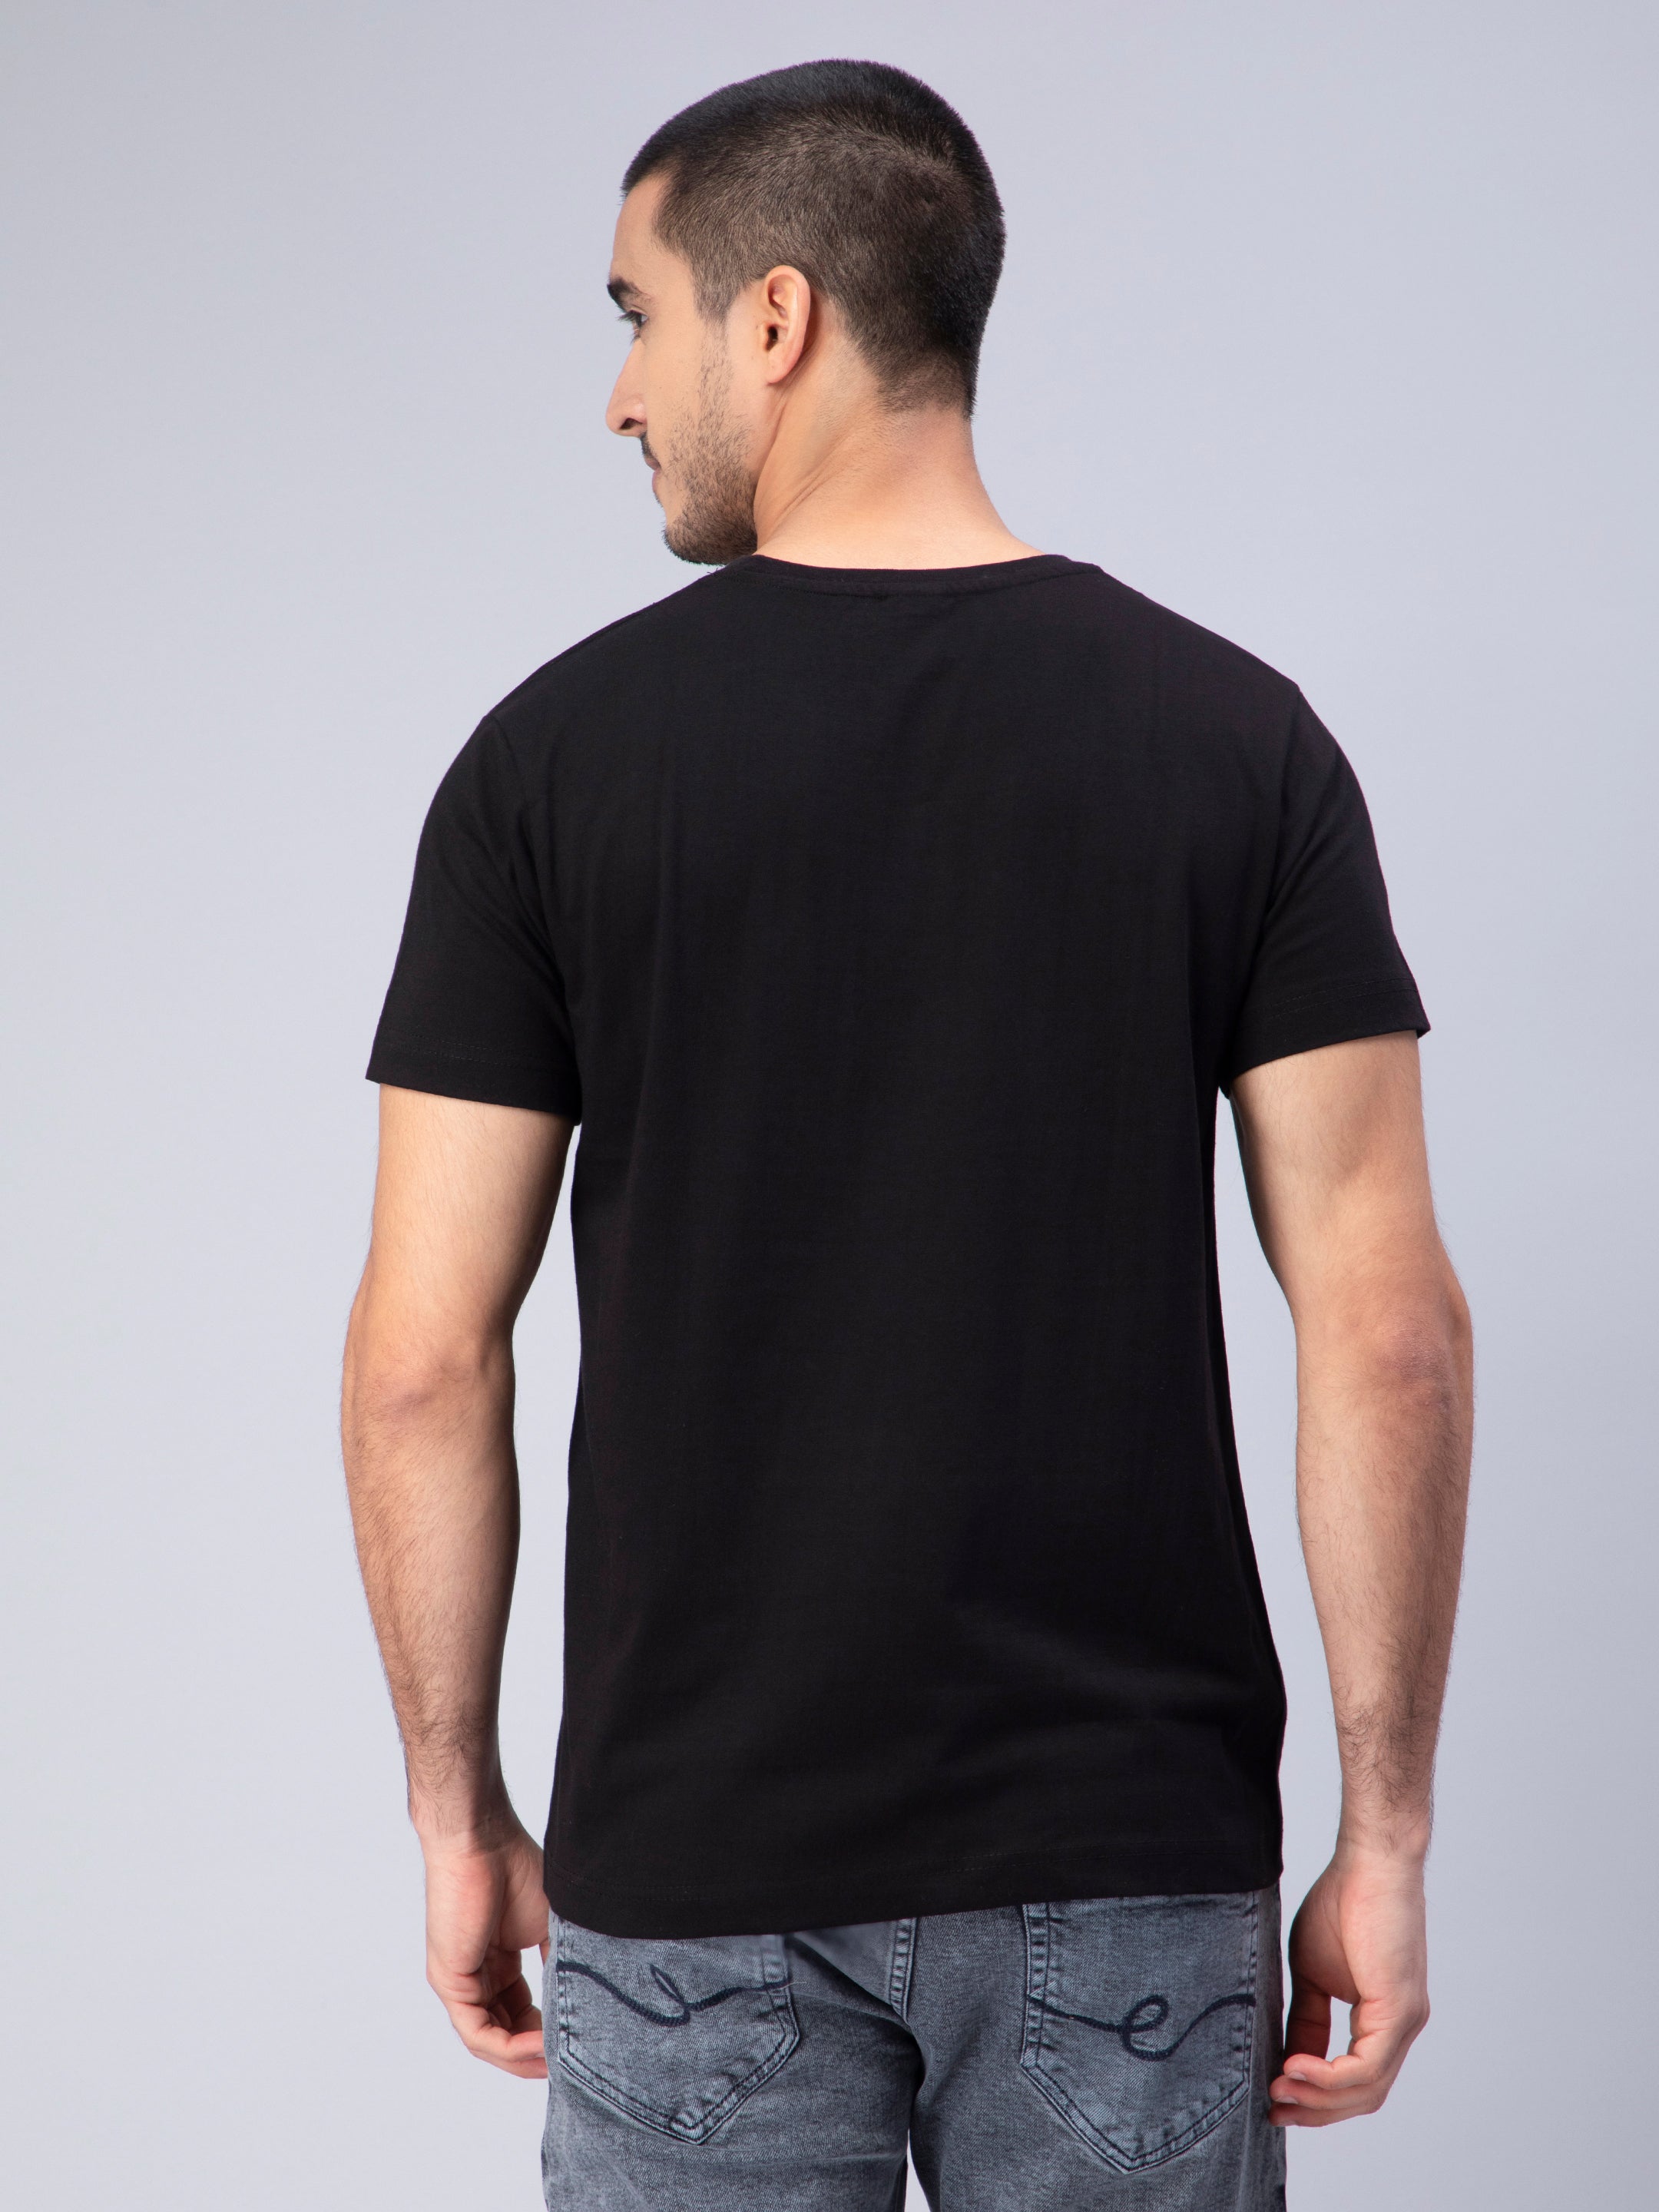 Milano Balenciaga Paris Balenciaga Los Angeles City TShirt  Trend T Shirt  Store Online